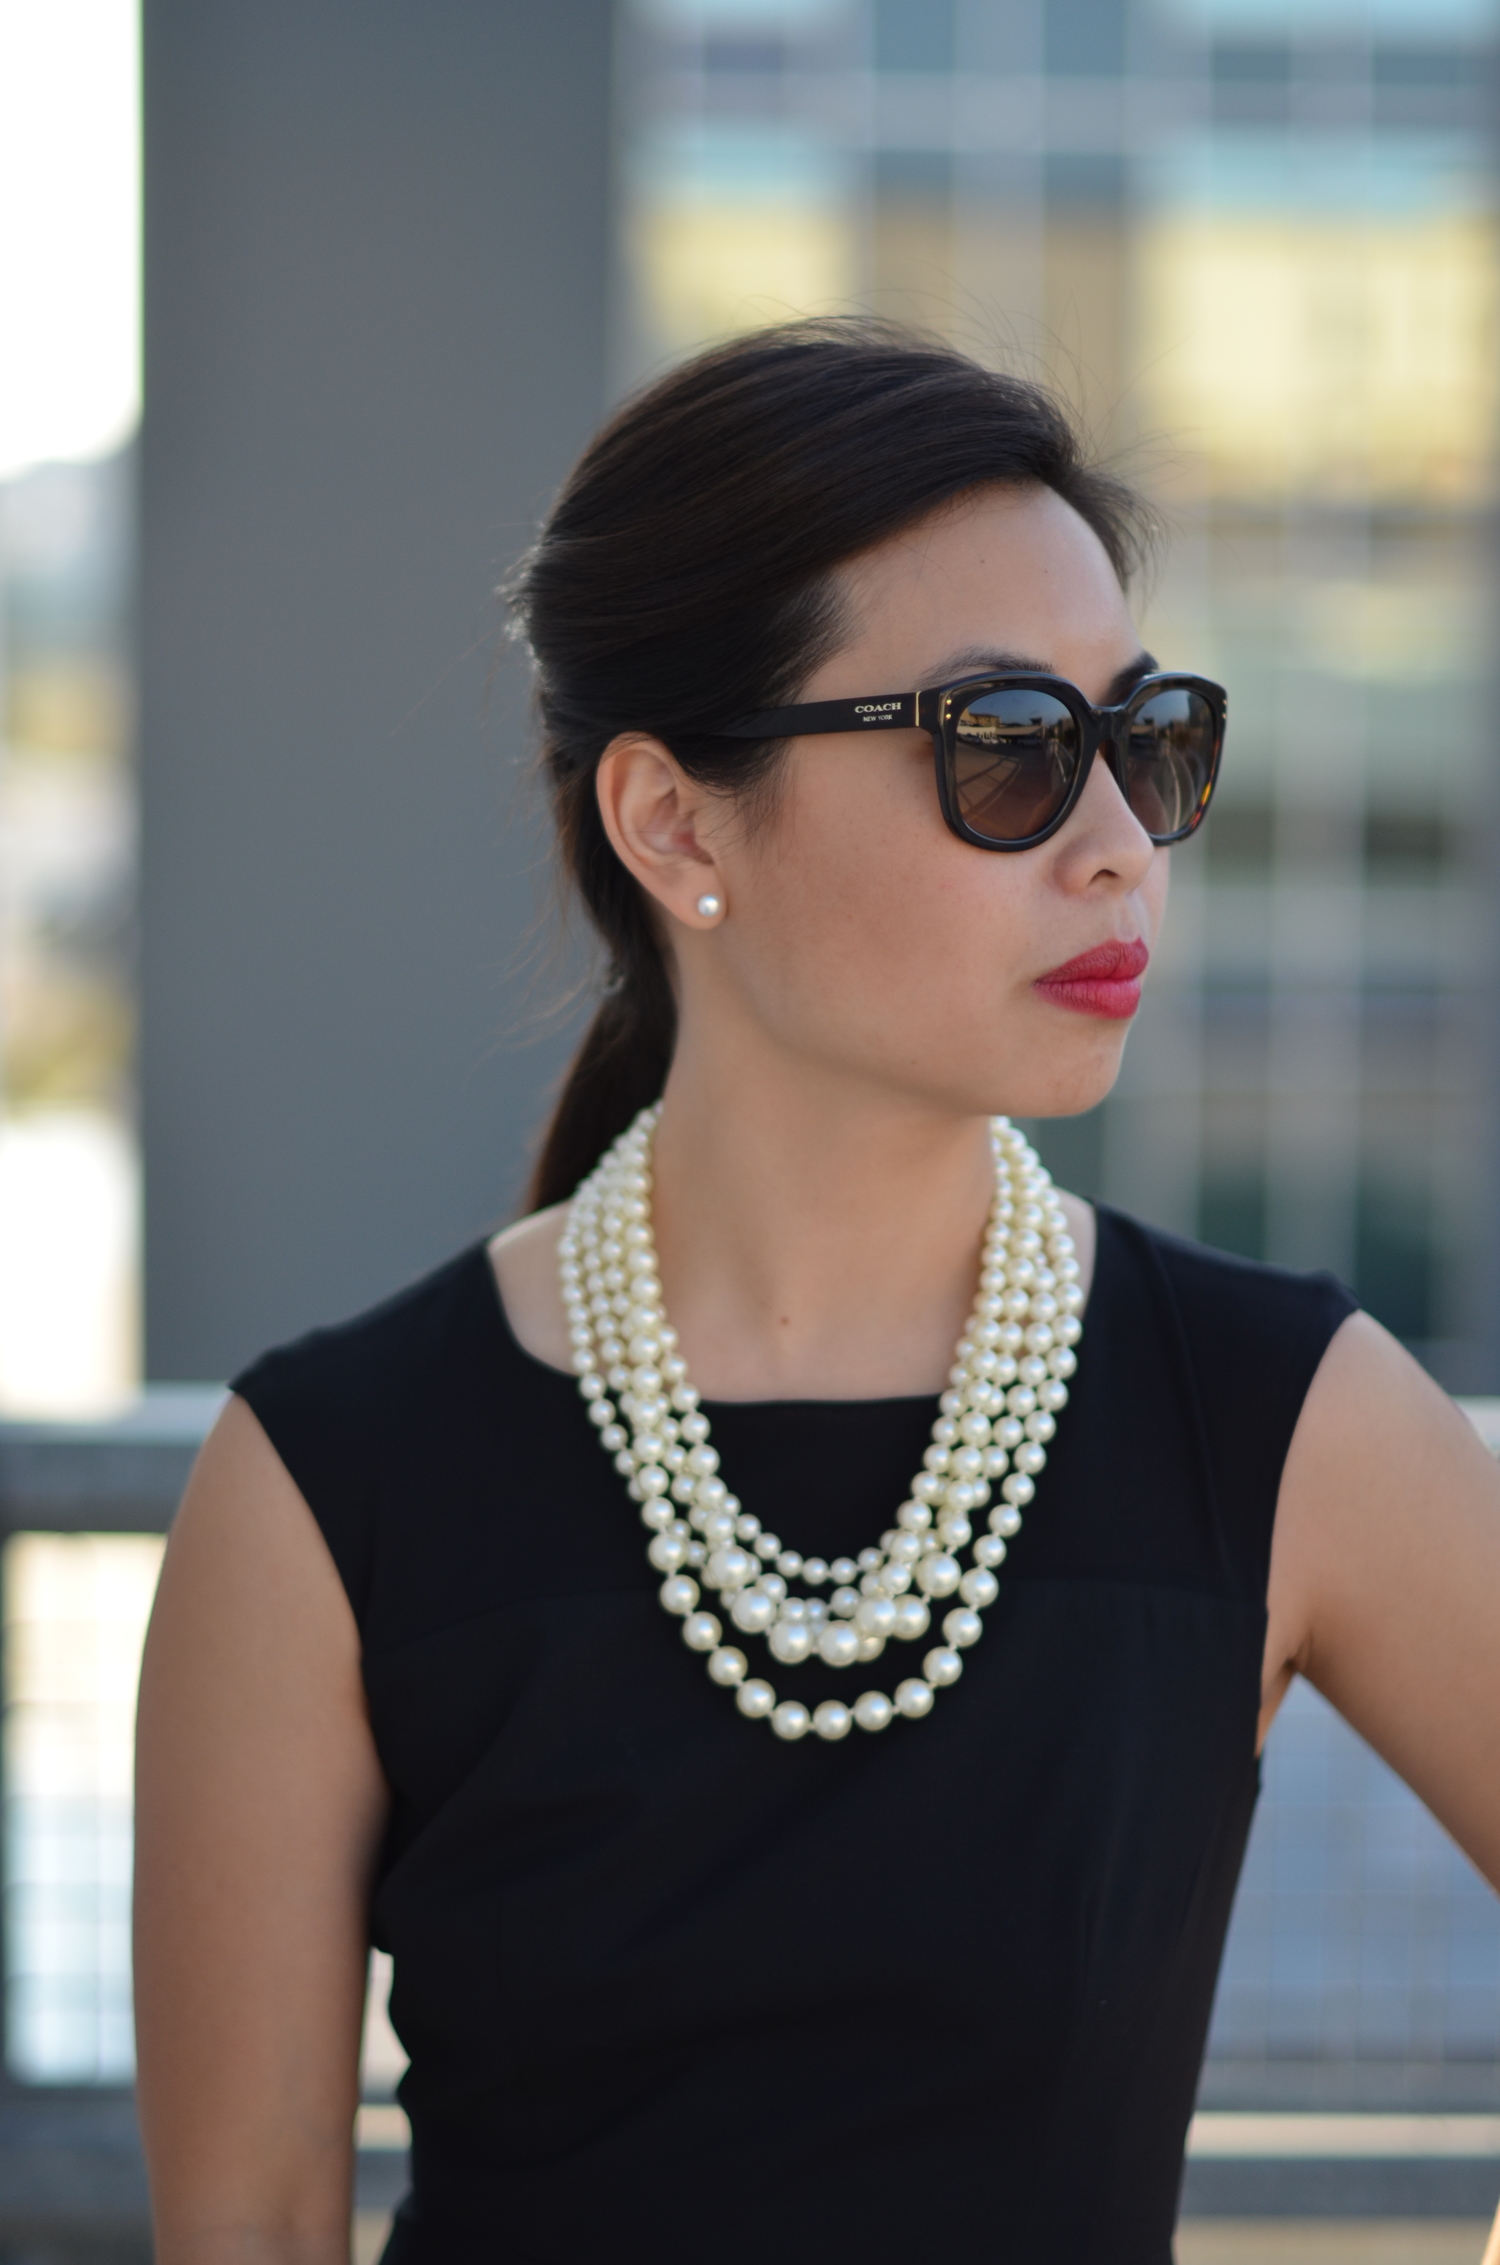 the little black dress & pearls — janna doan